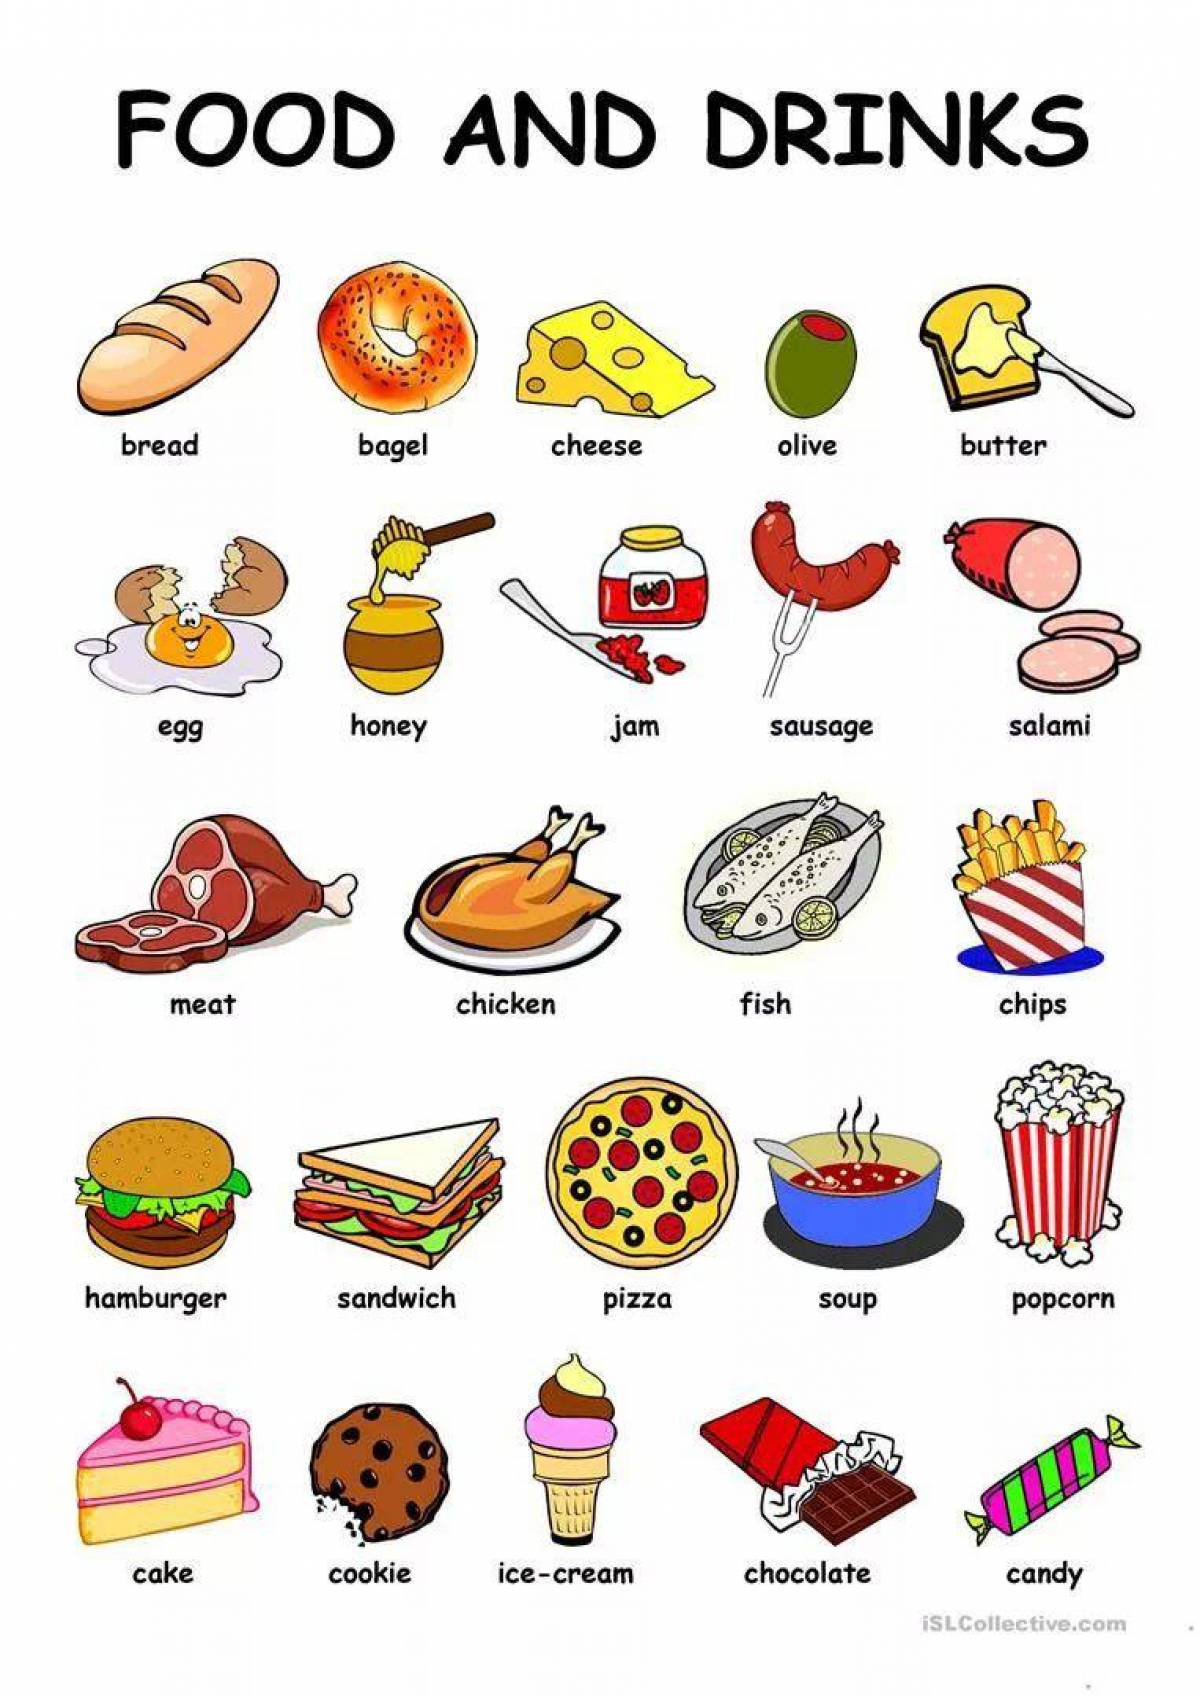 Еда на английском картинки